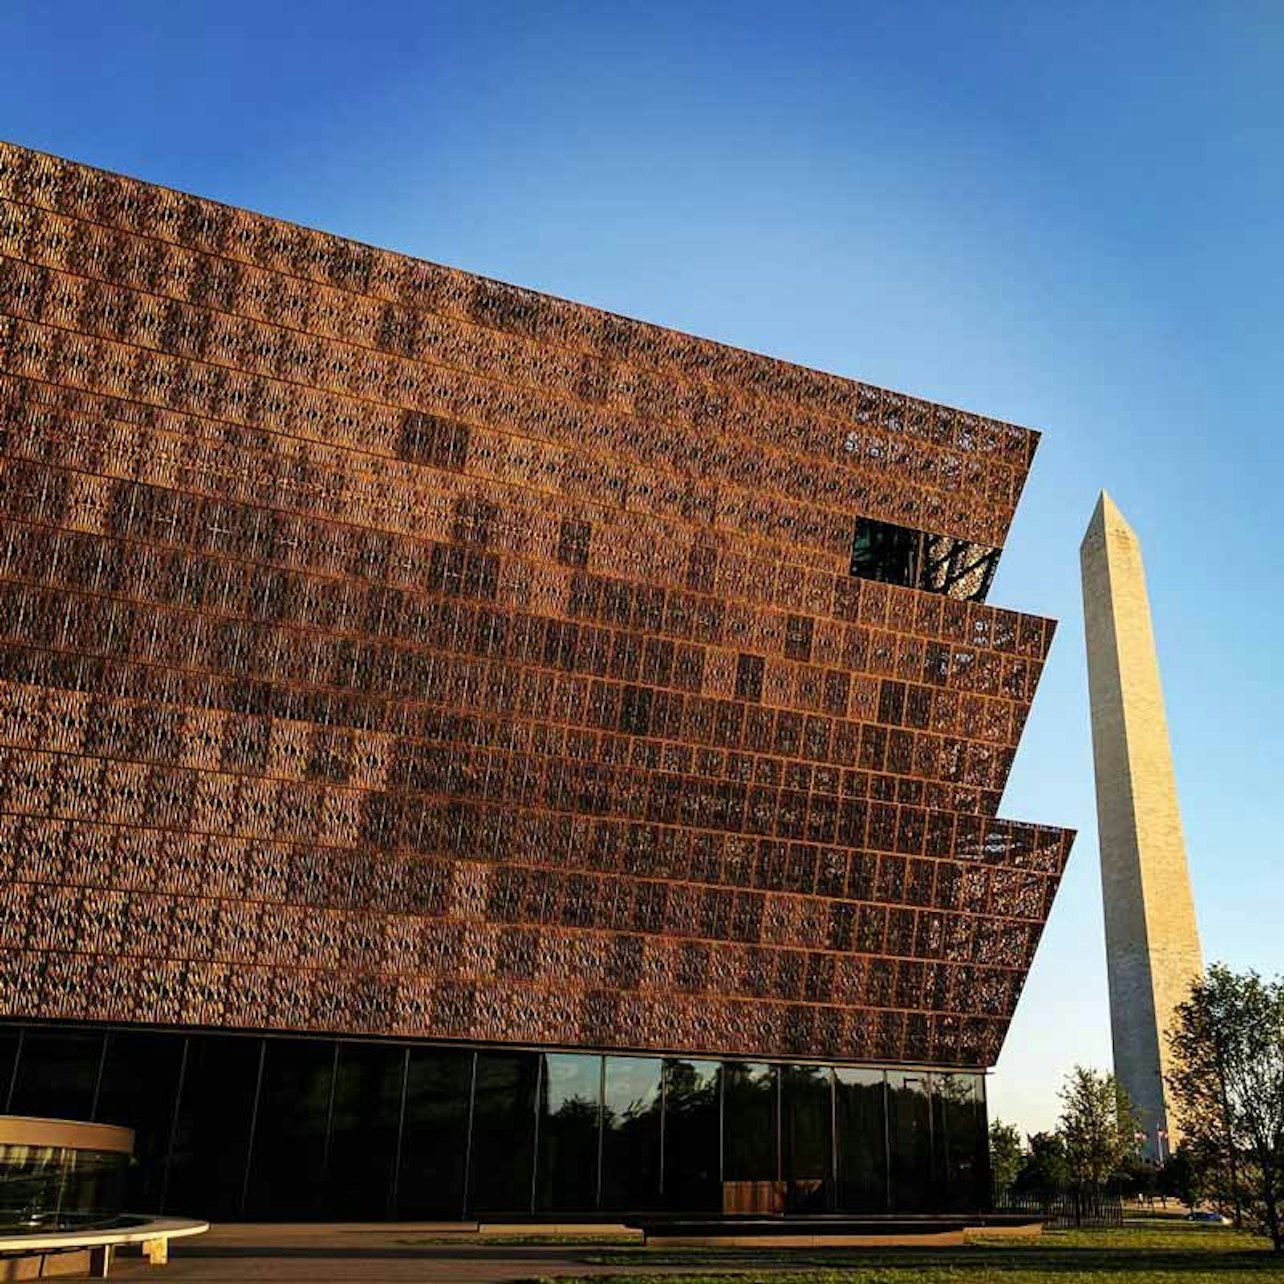 Tour de cultura afroestadounidense y Museo de Historia Afroestadounidense - Alojamientos en Washington D.C.